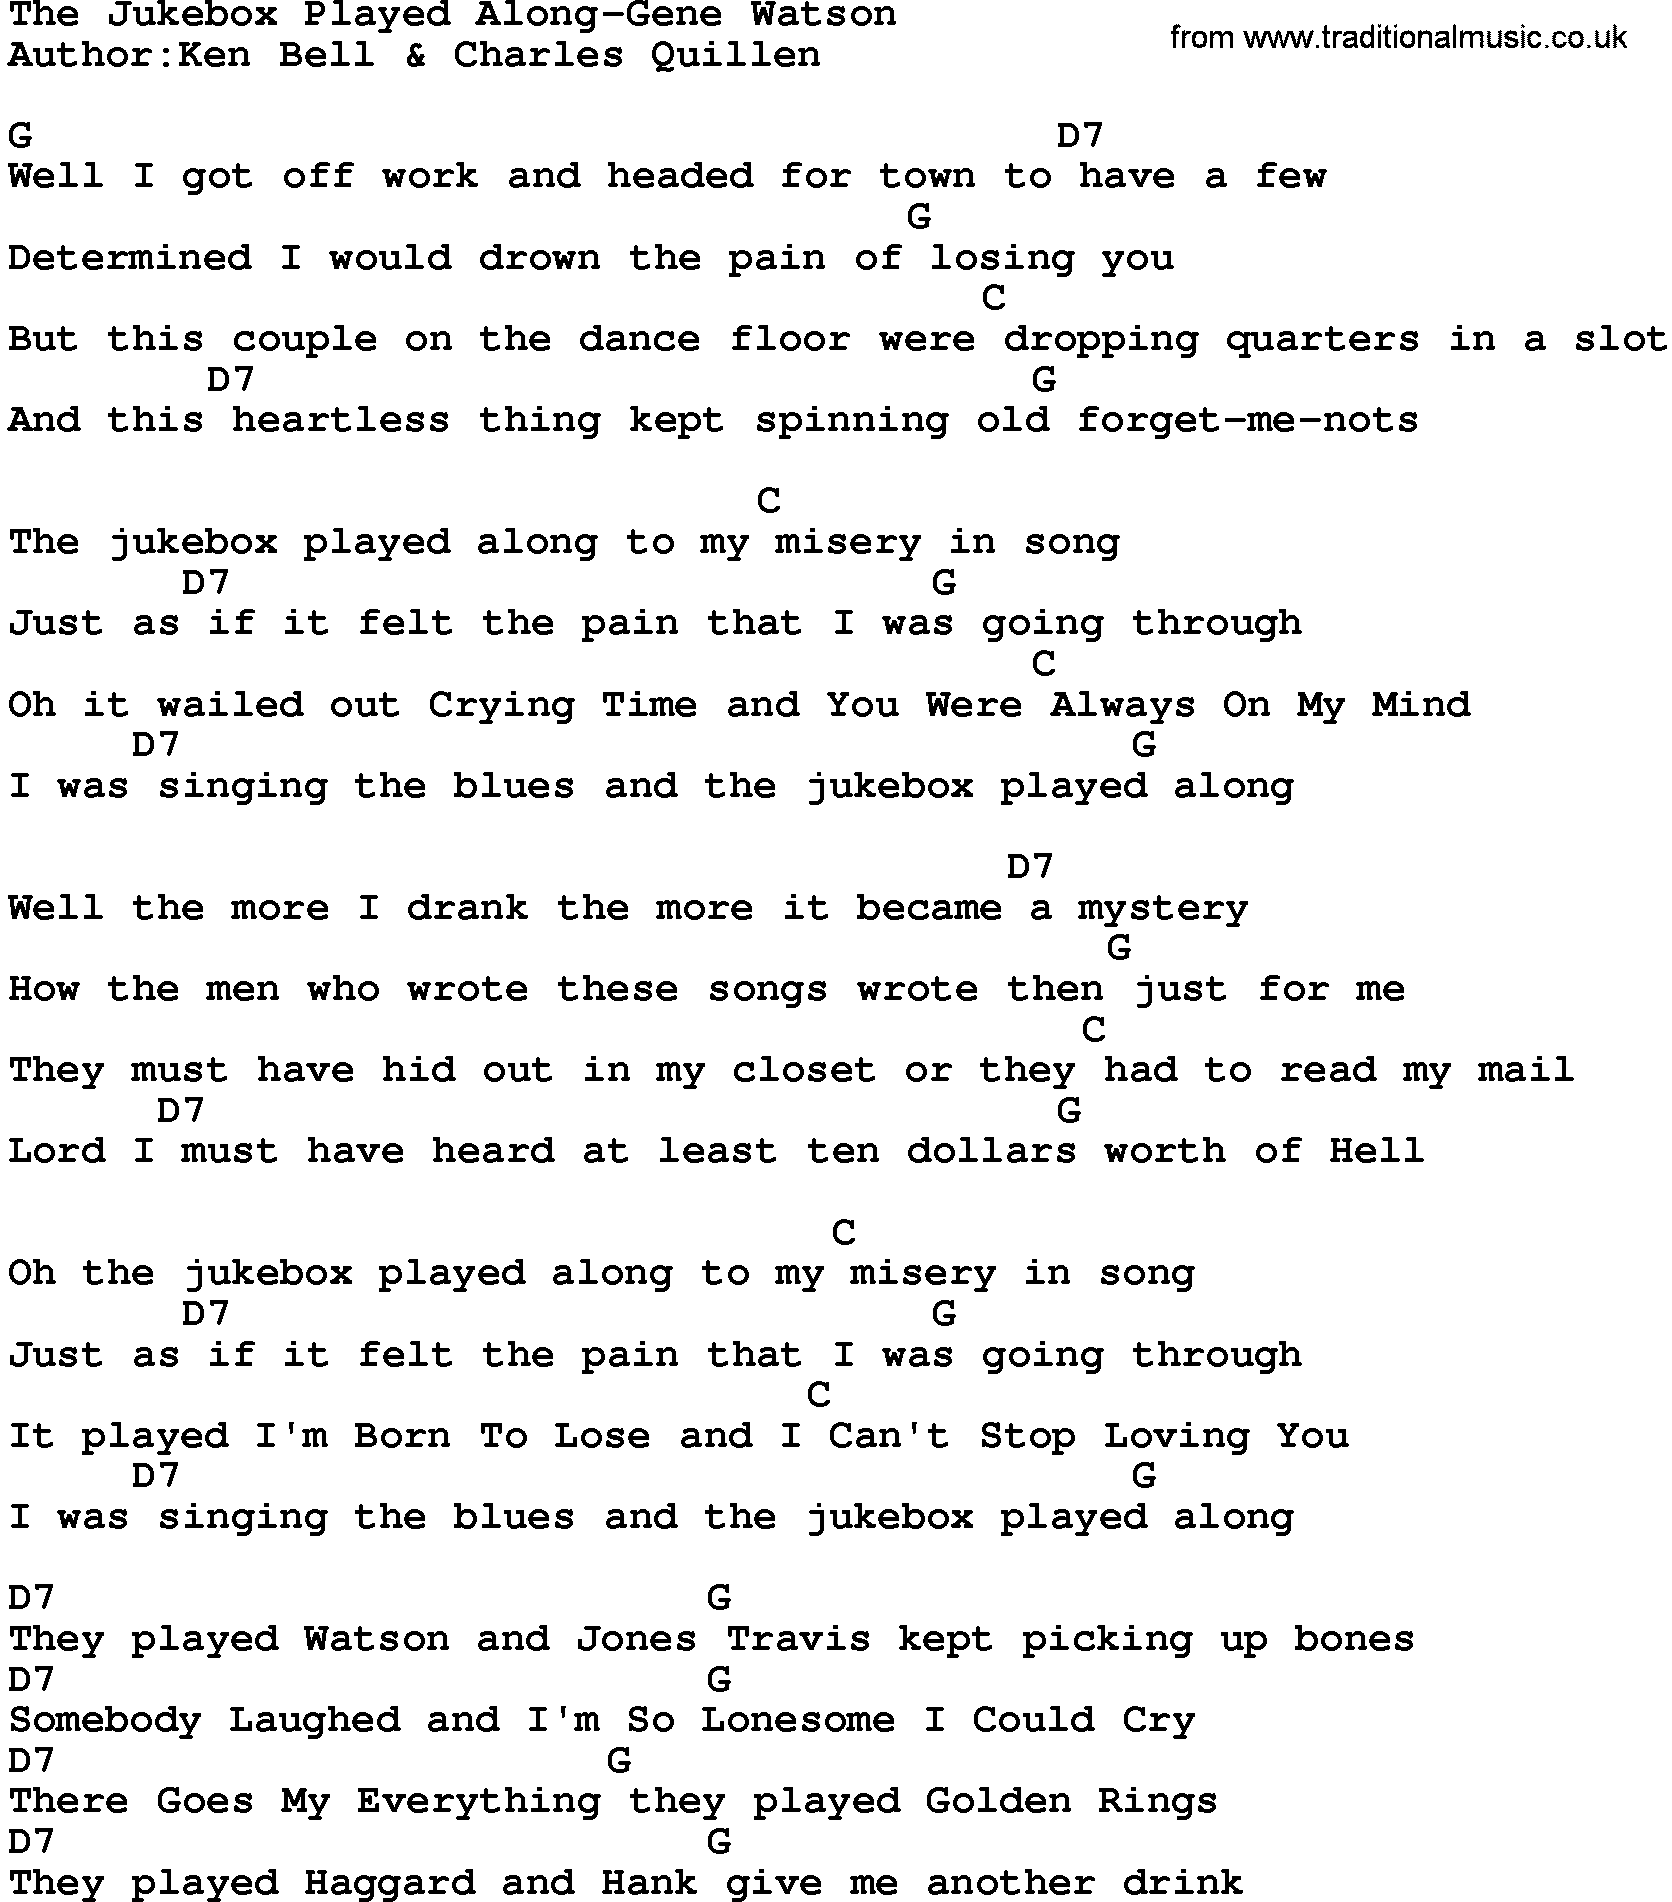 Country music song: The Jukebox Played Along-Gene Watson lyrics and chords